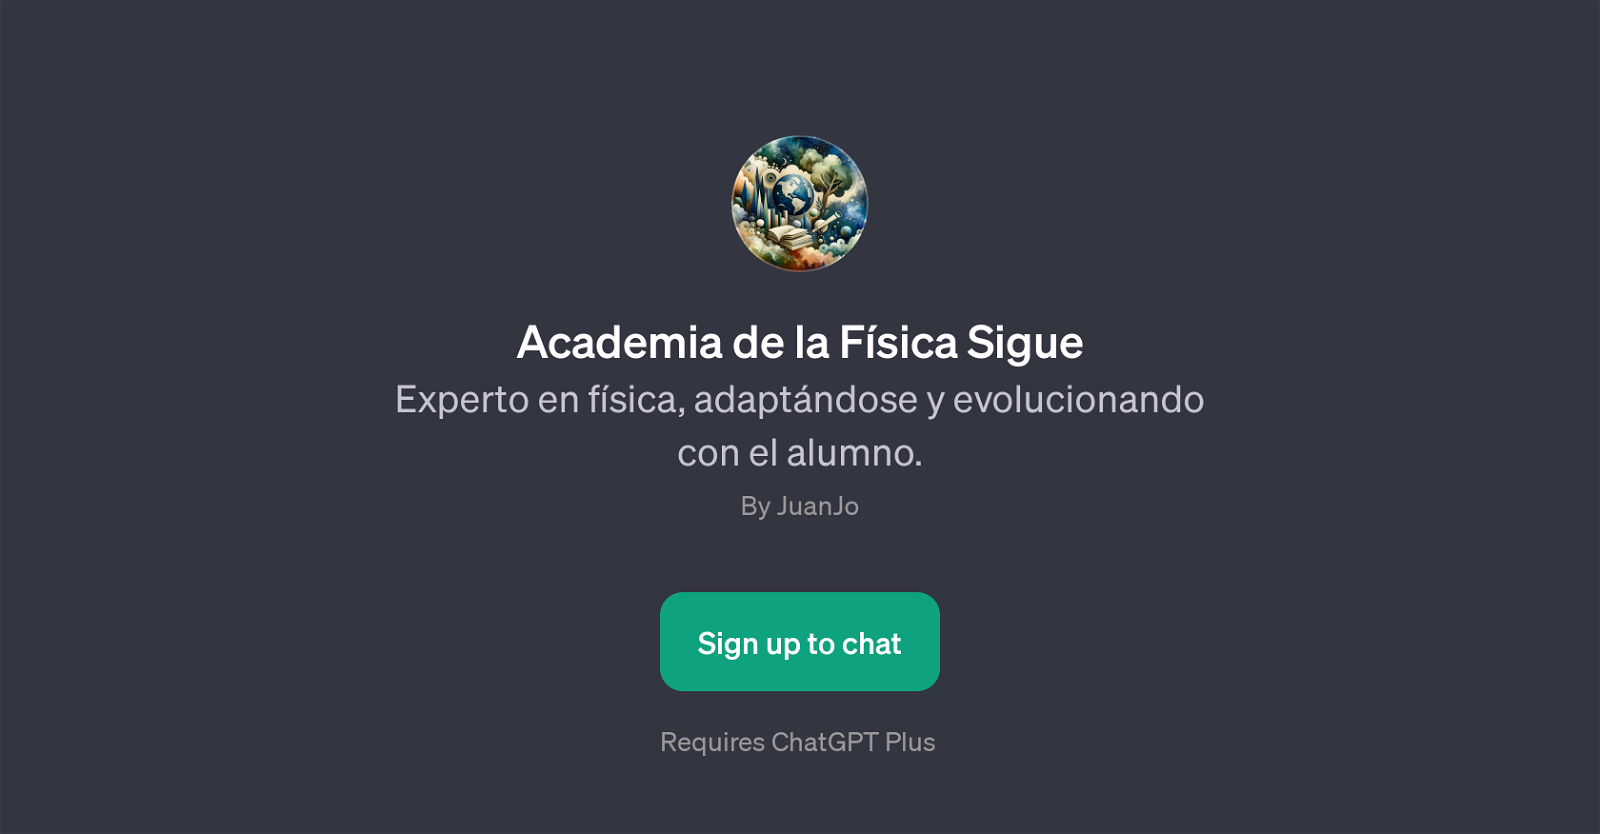 Academia de la Fsica Sigue website